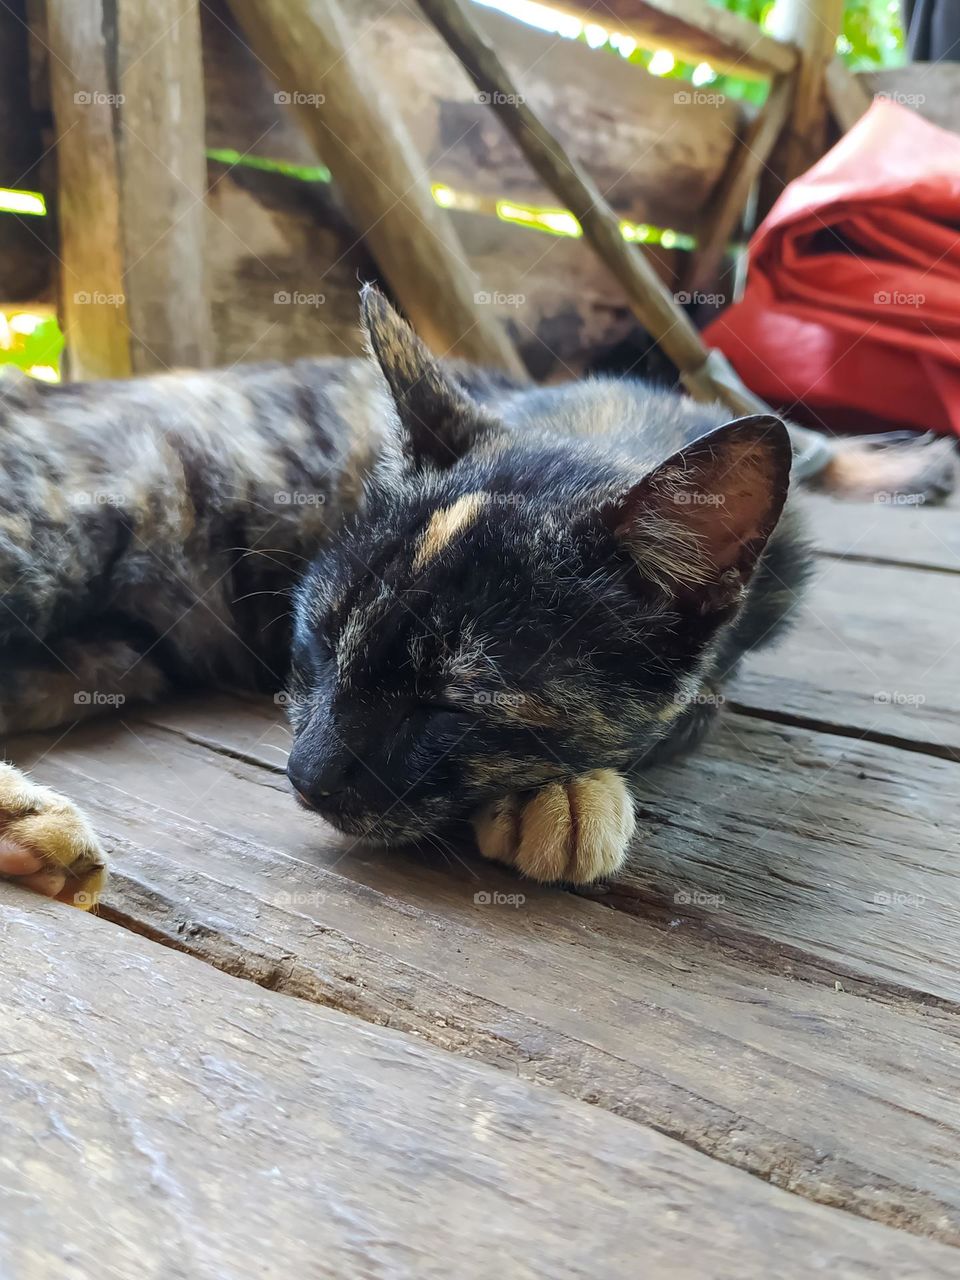 cat sleeping on a wooden hut